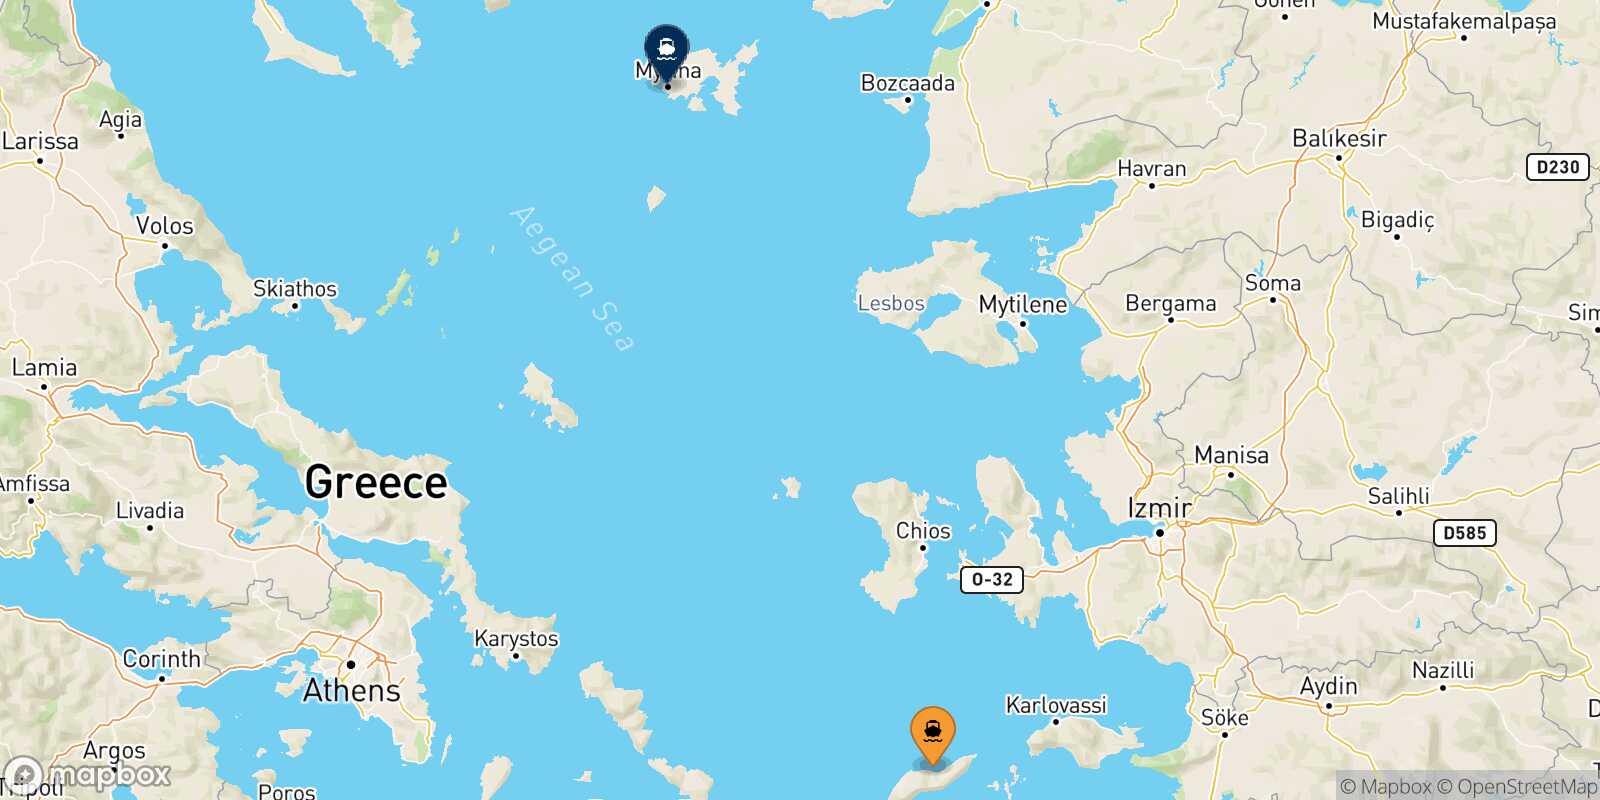 Agios Kirikos (Ikaria) Myrina (Limnos) route map